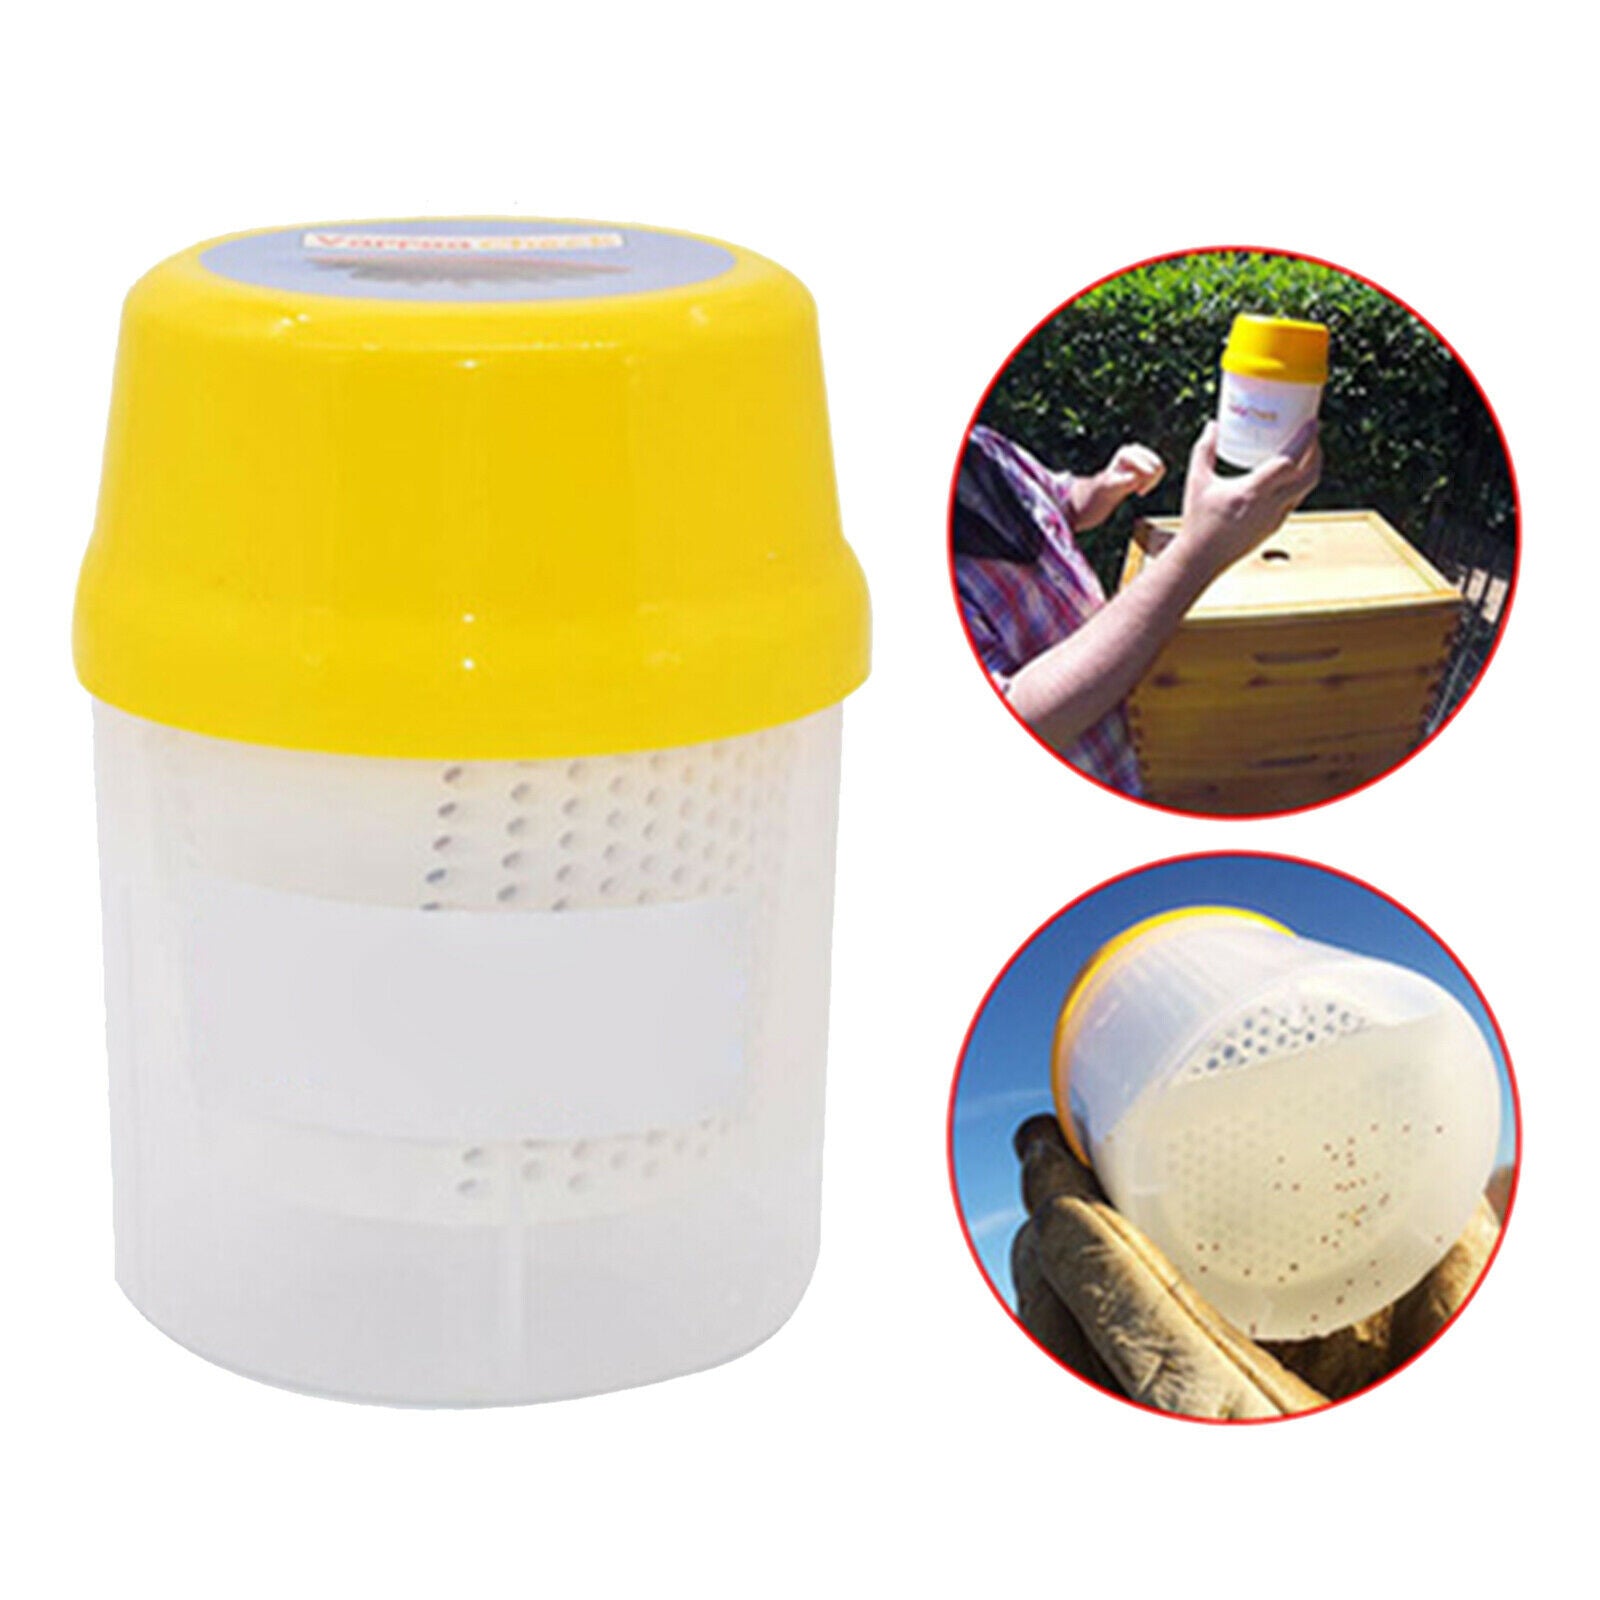 Varroa Shaker Mite Killer Monitoring Bottle Beekeeper Bees Equipment Tool